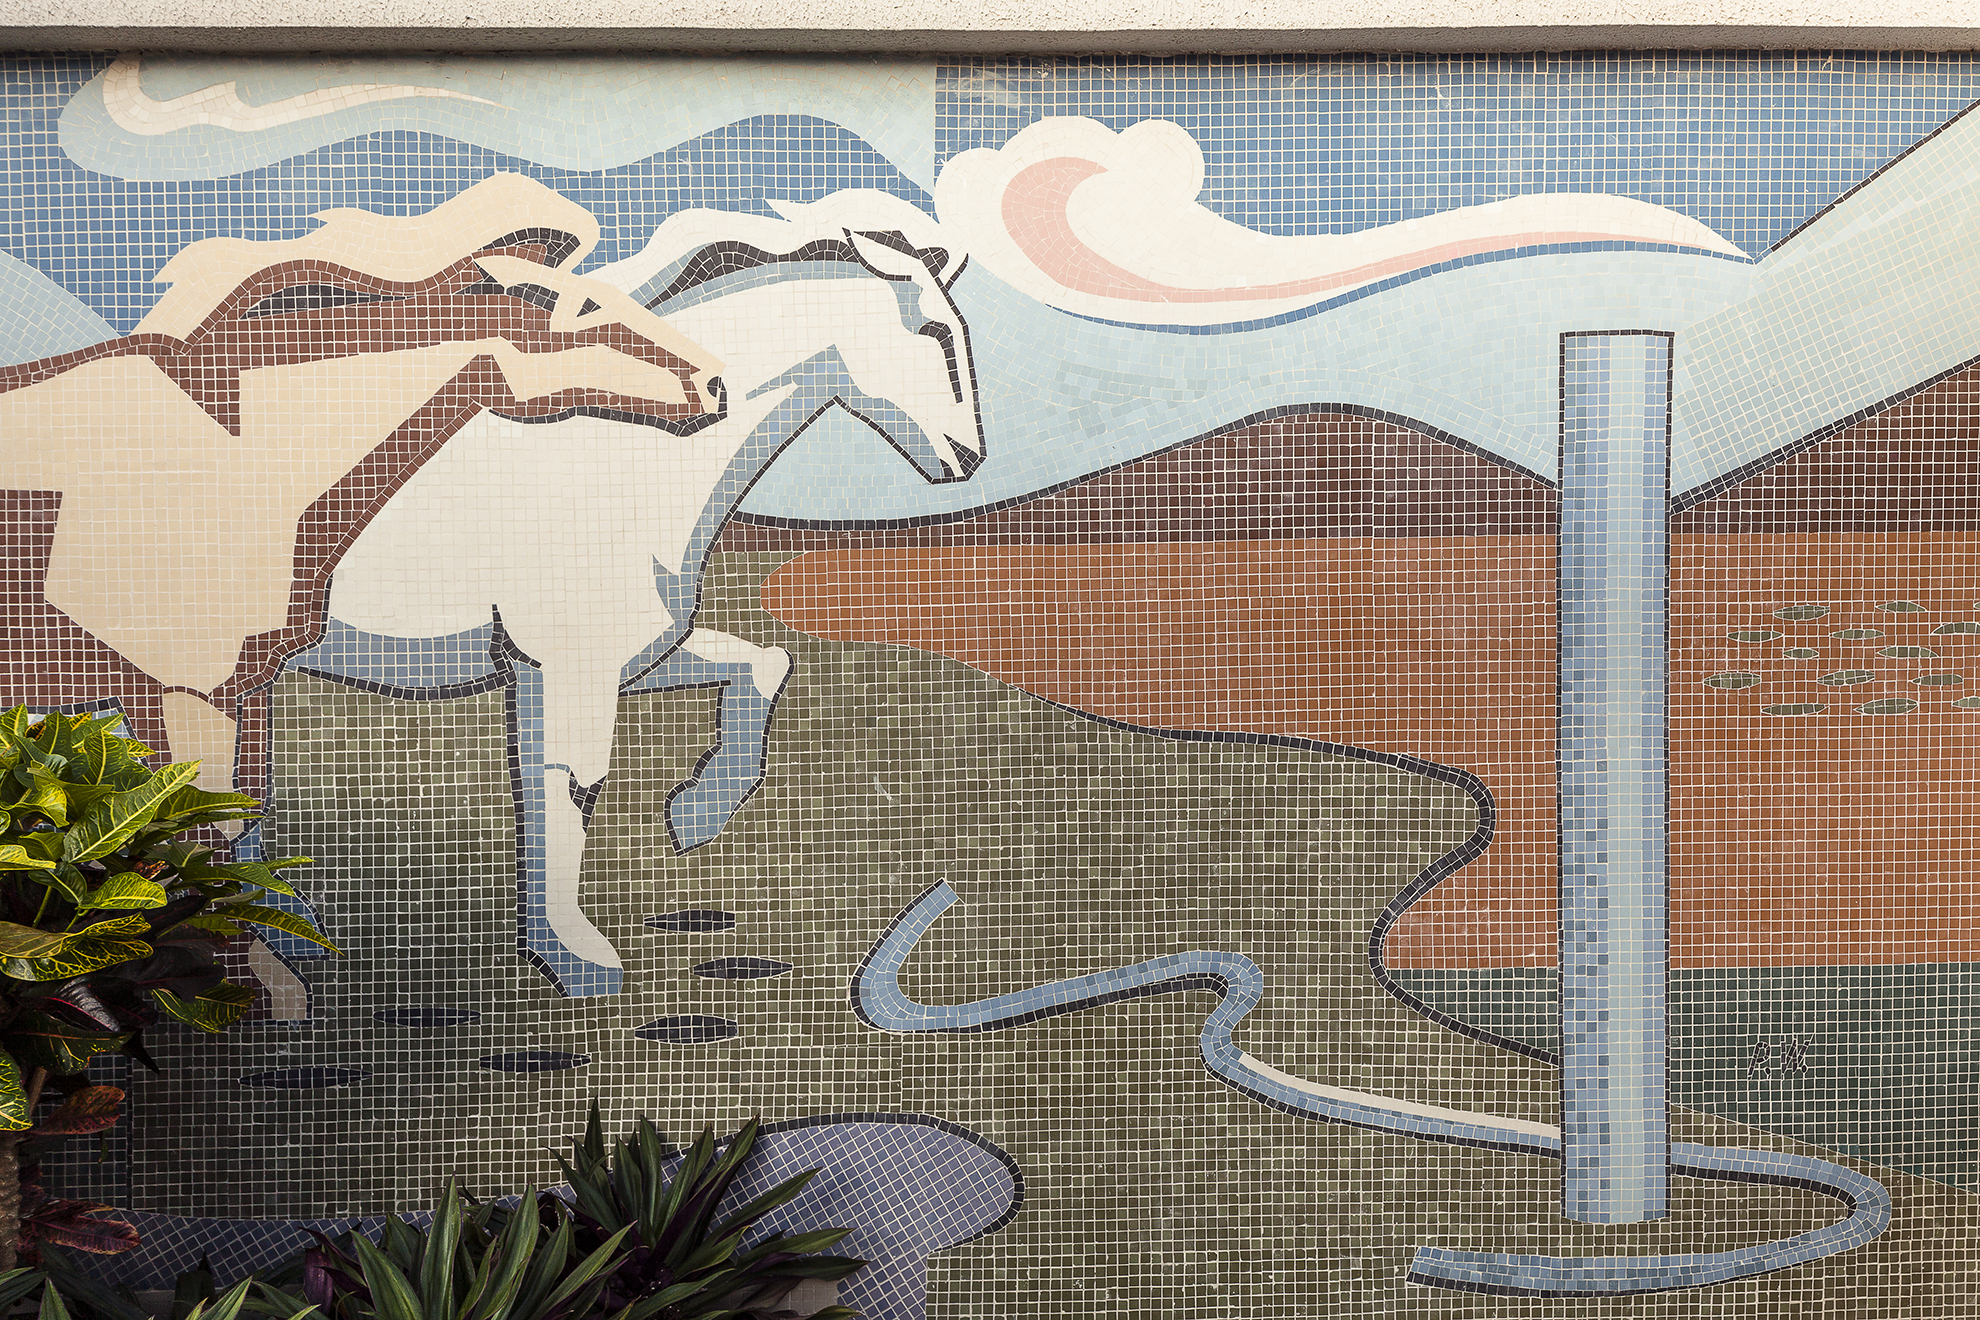 Painel de moisaicos coloridos representando cavalos cavalgando